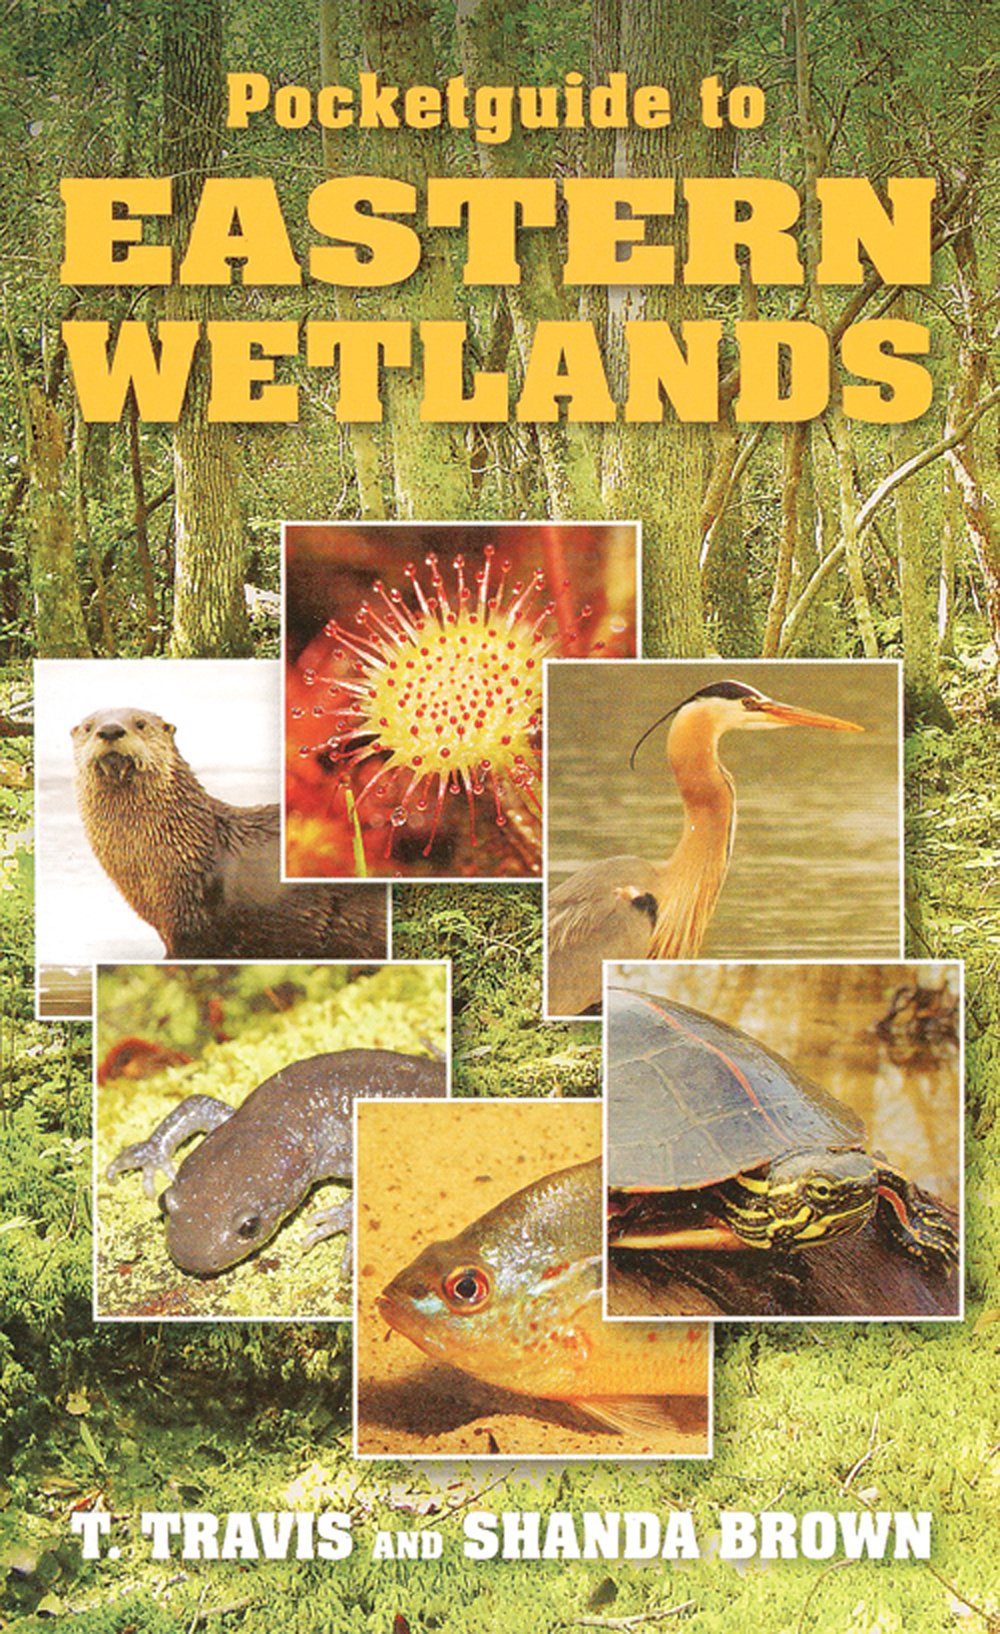 Pocket Guide to Eastern Wetlands